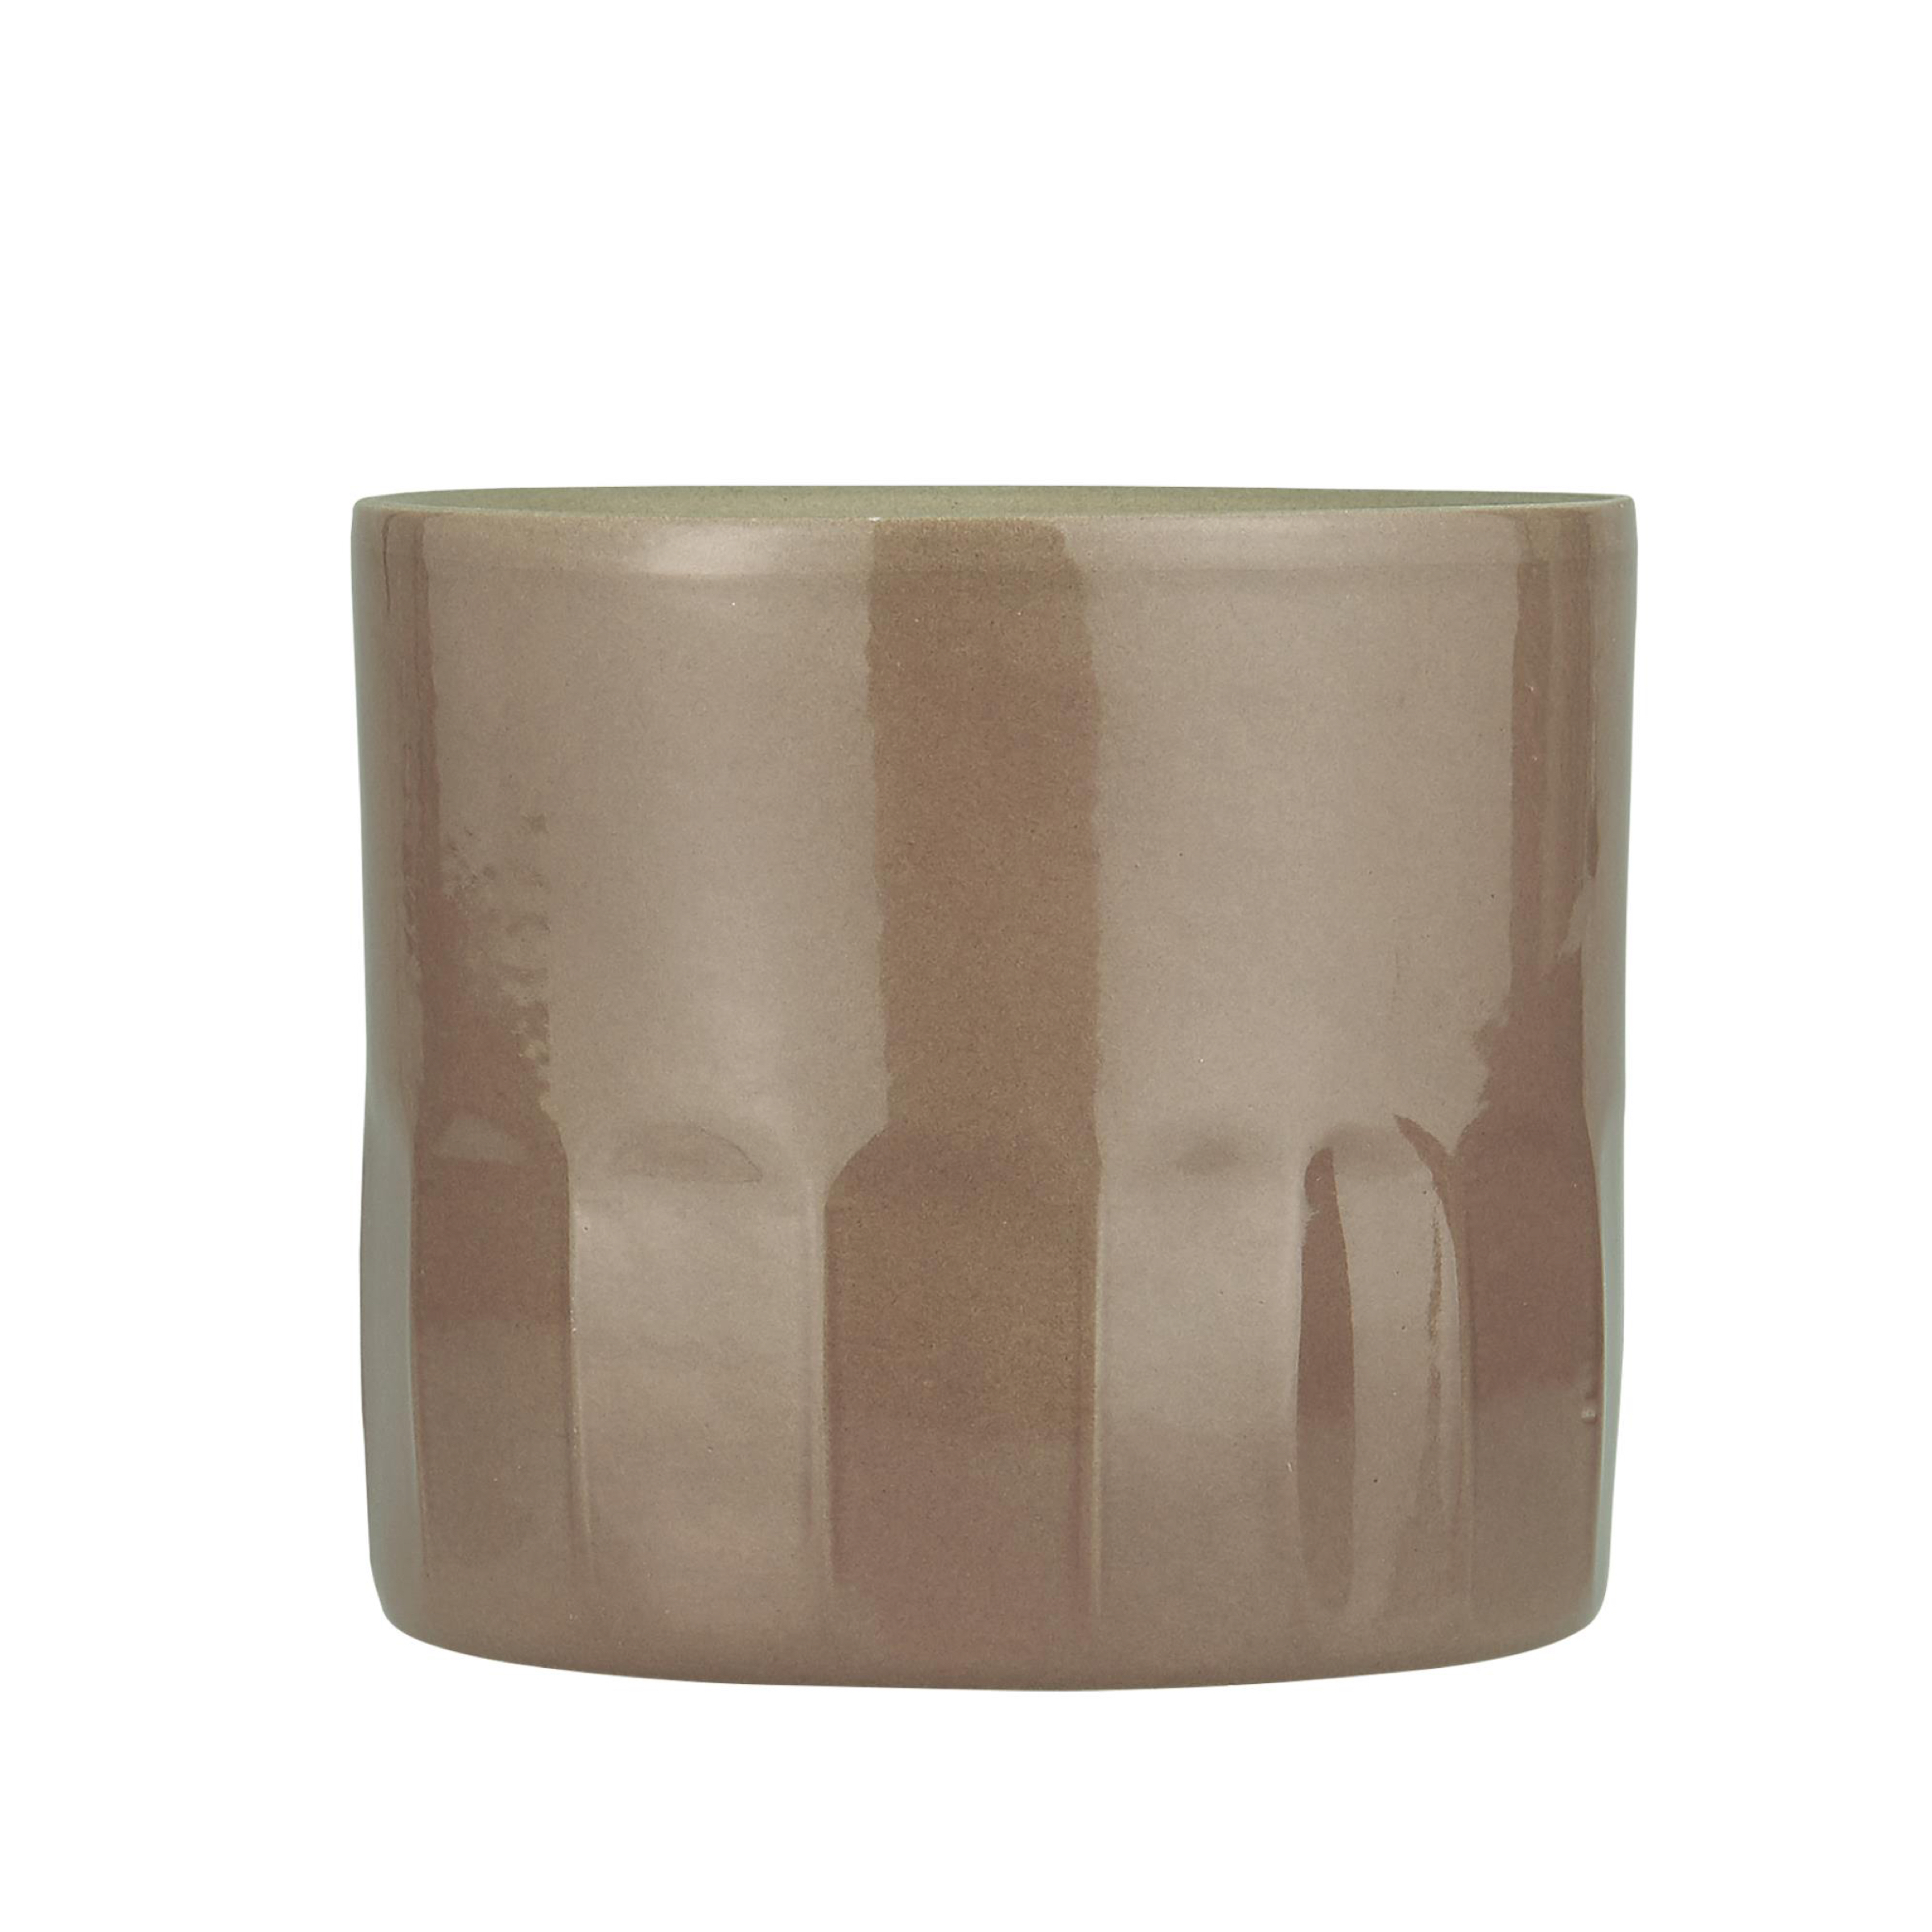 Ib Laursen Large Glazed Stoneware ‘North Sea’ Plant Pot - Latte 